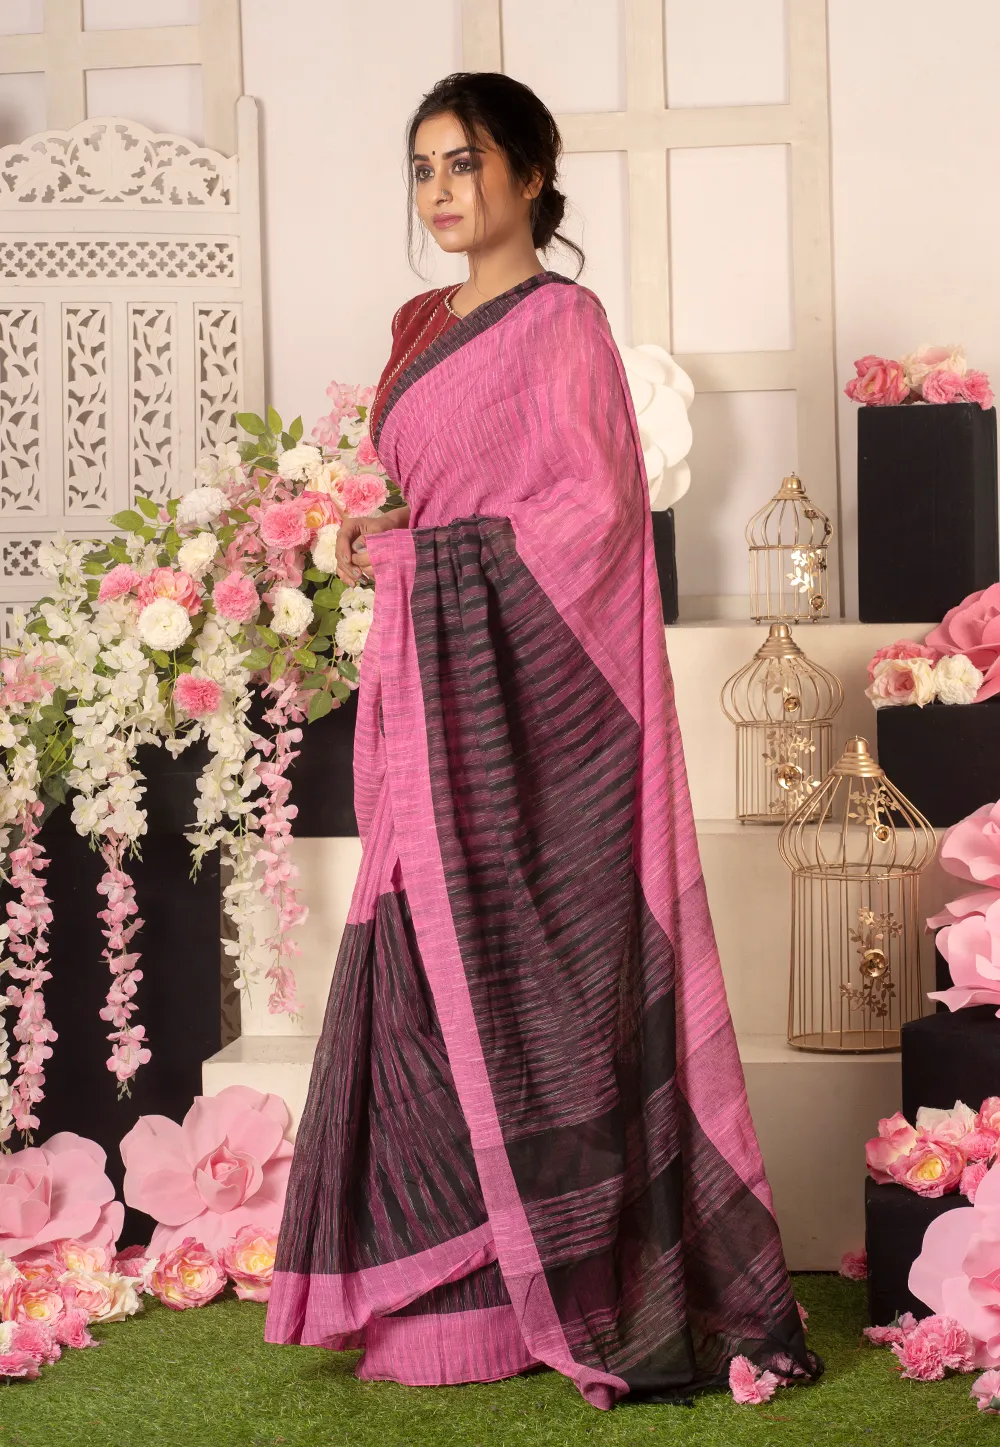 pink and black handloom cotton ikkat saree 6018f88b2f4bf 1612249227